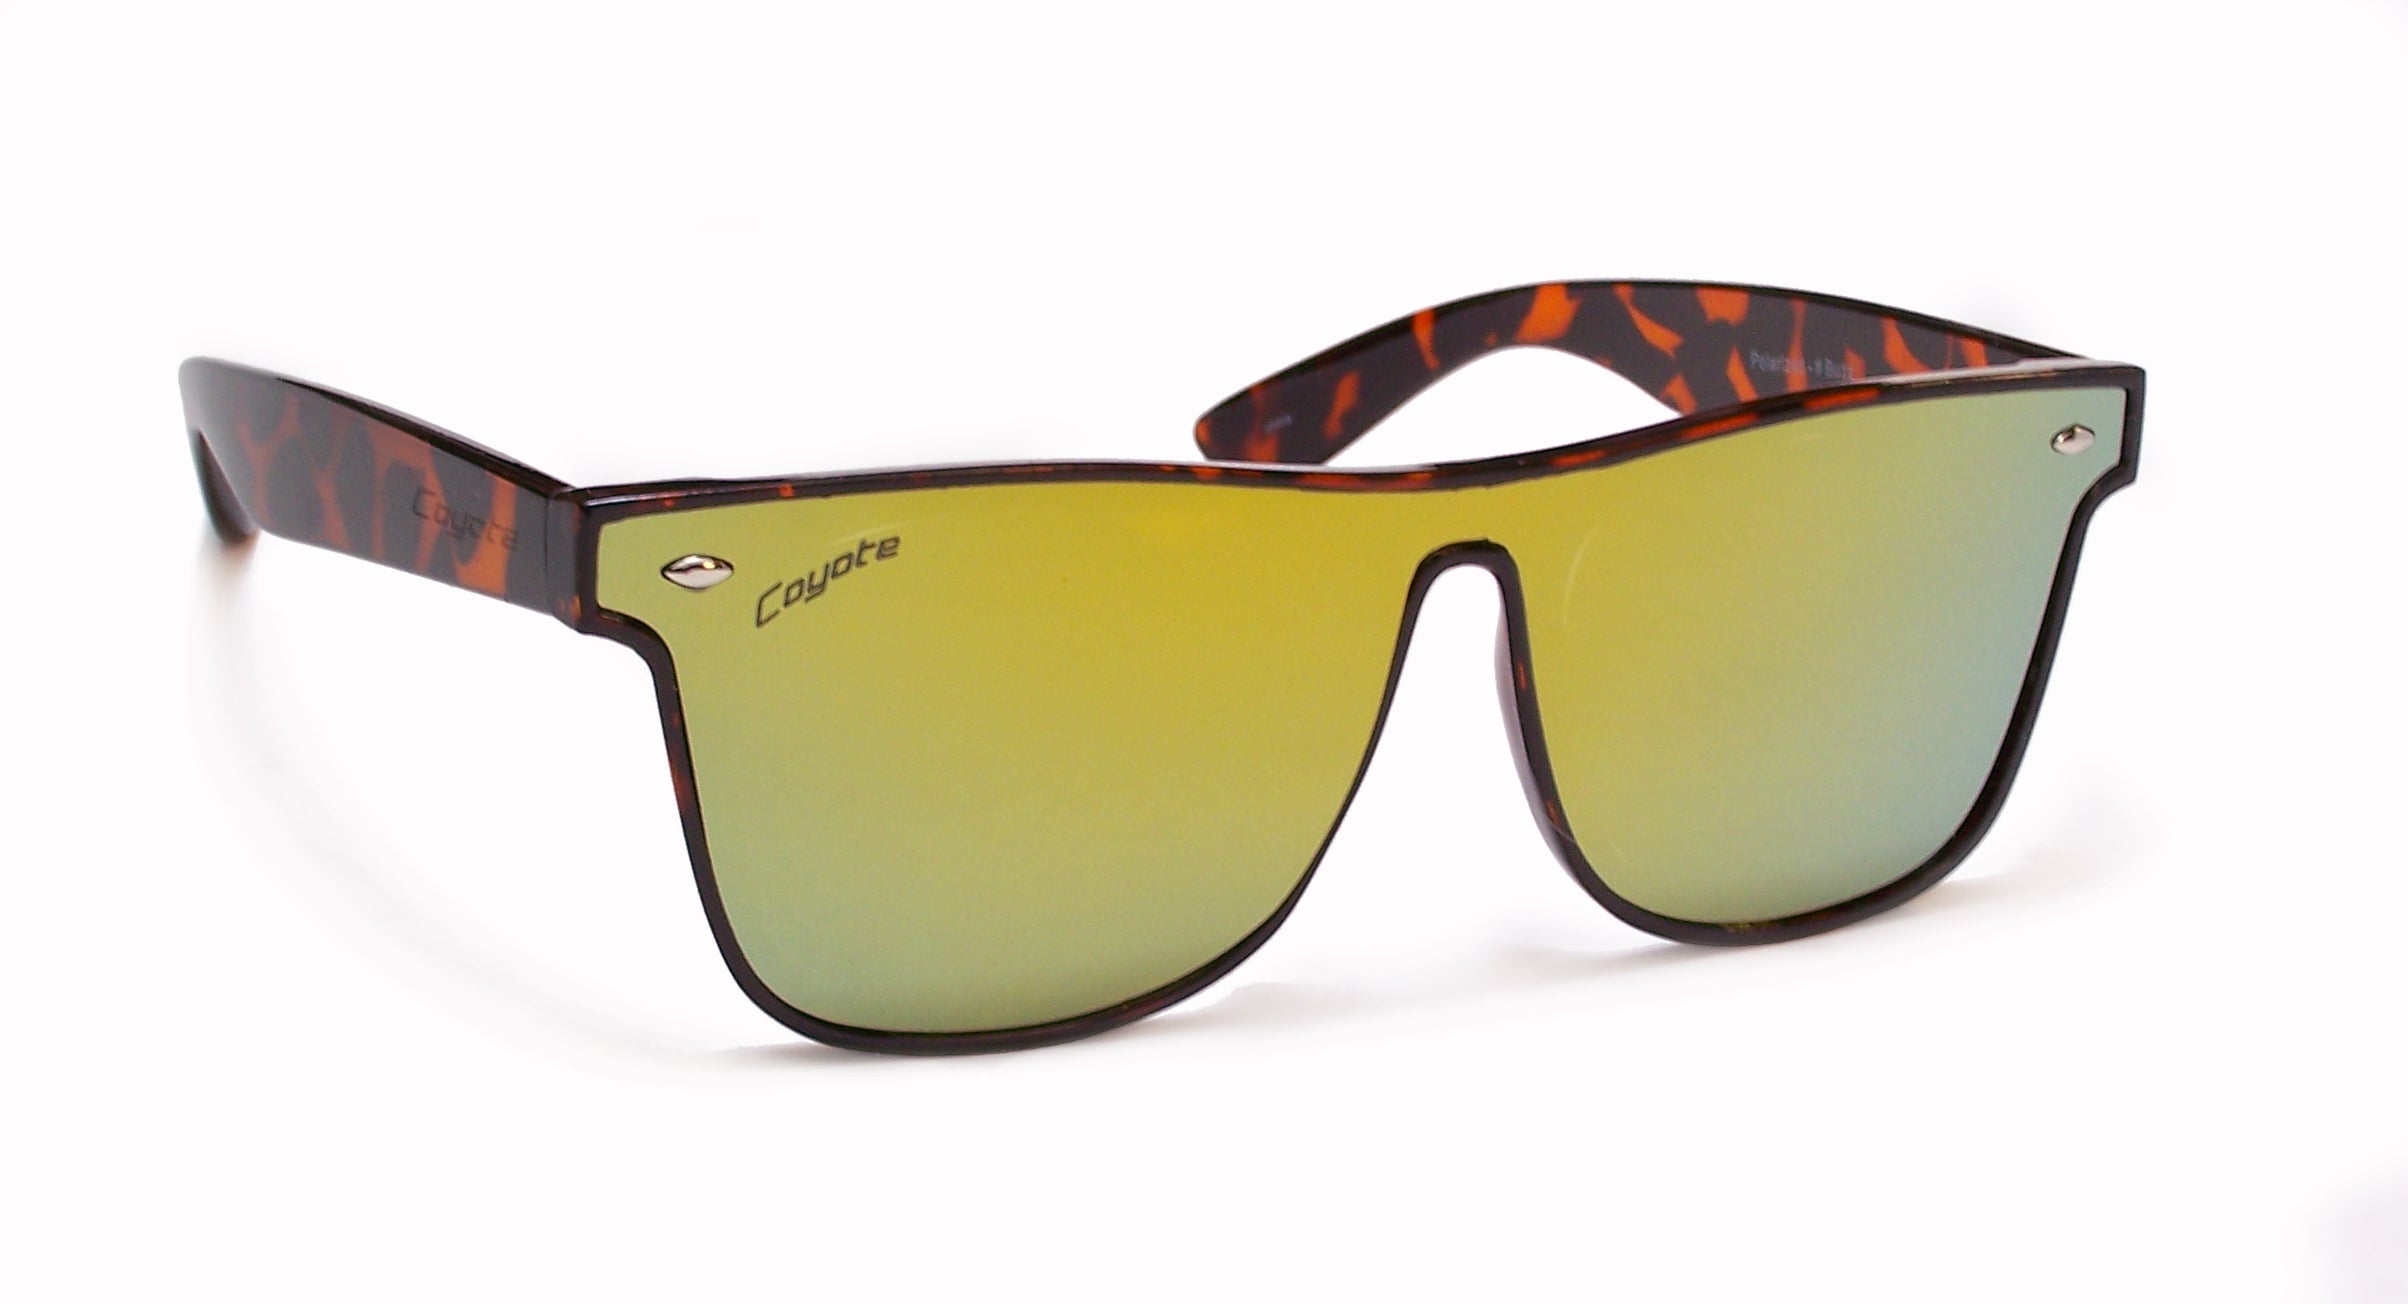 New! Coyote Sunglasses